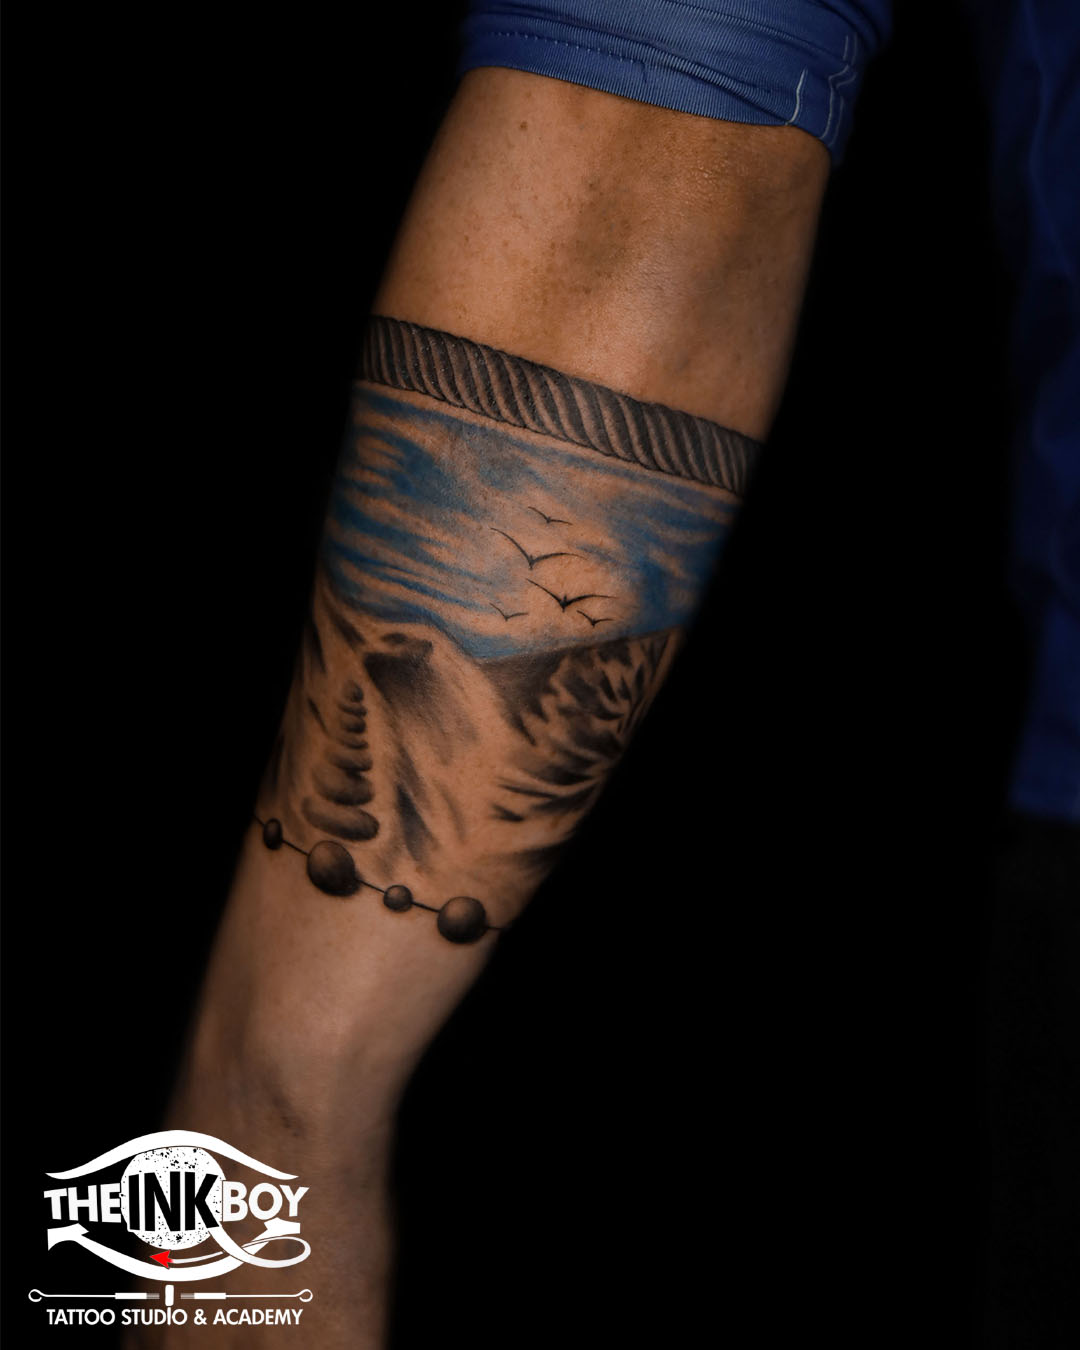 Wildflower inspired arm band by Derek at 550 Tattoo, Durango, CO. : r/ tattoos